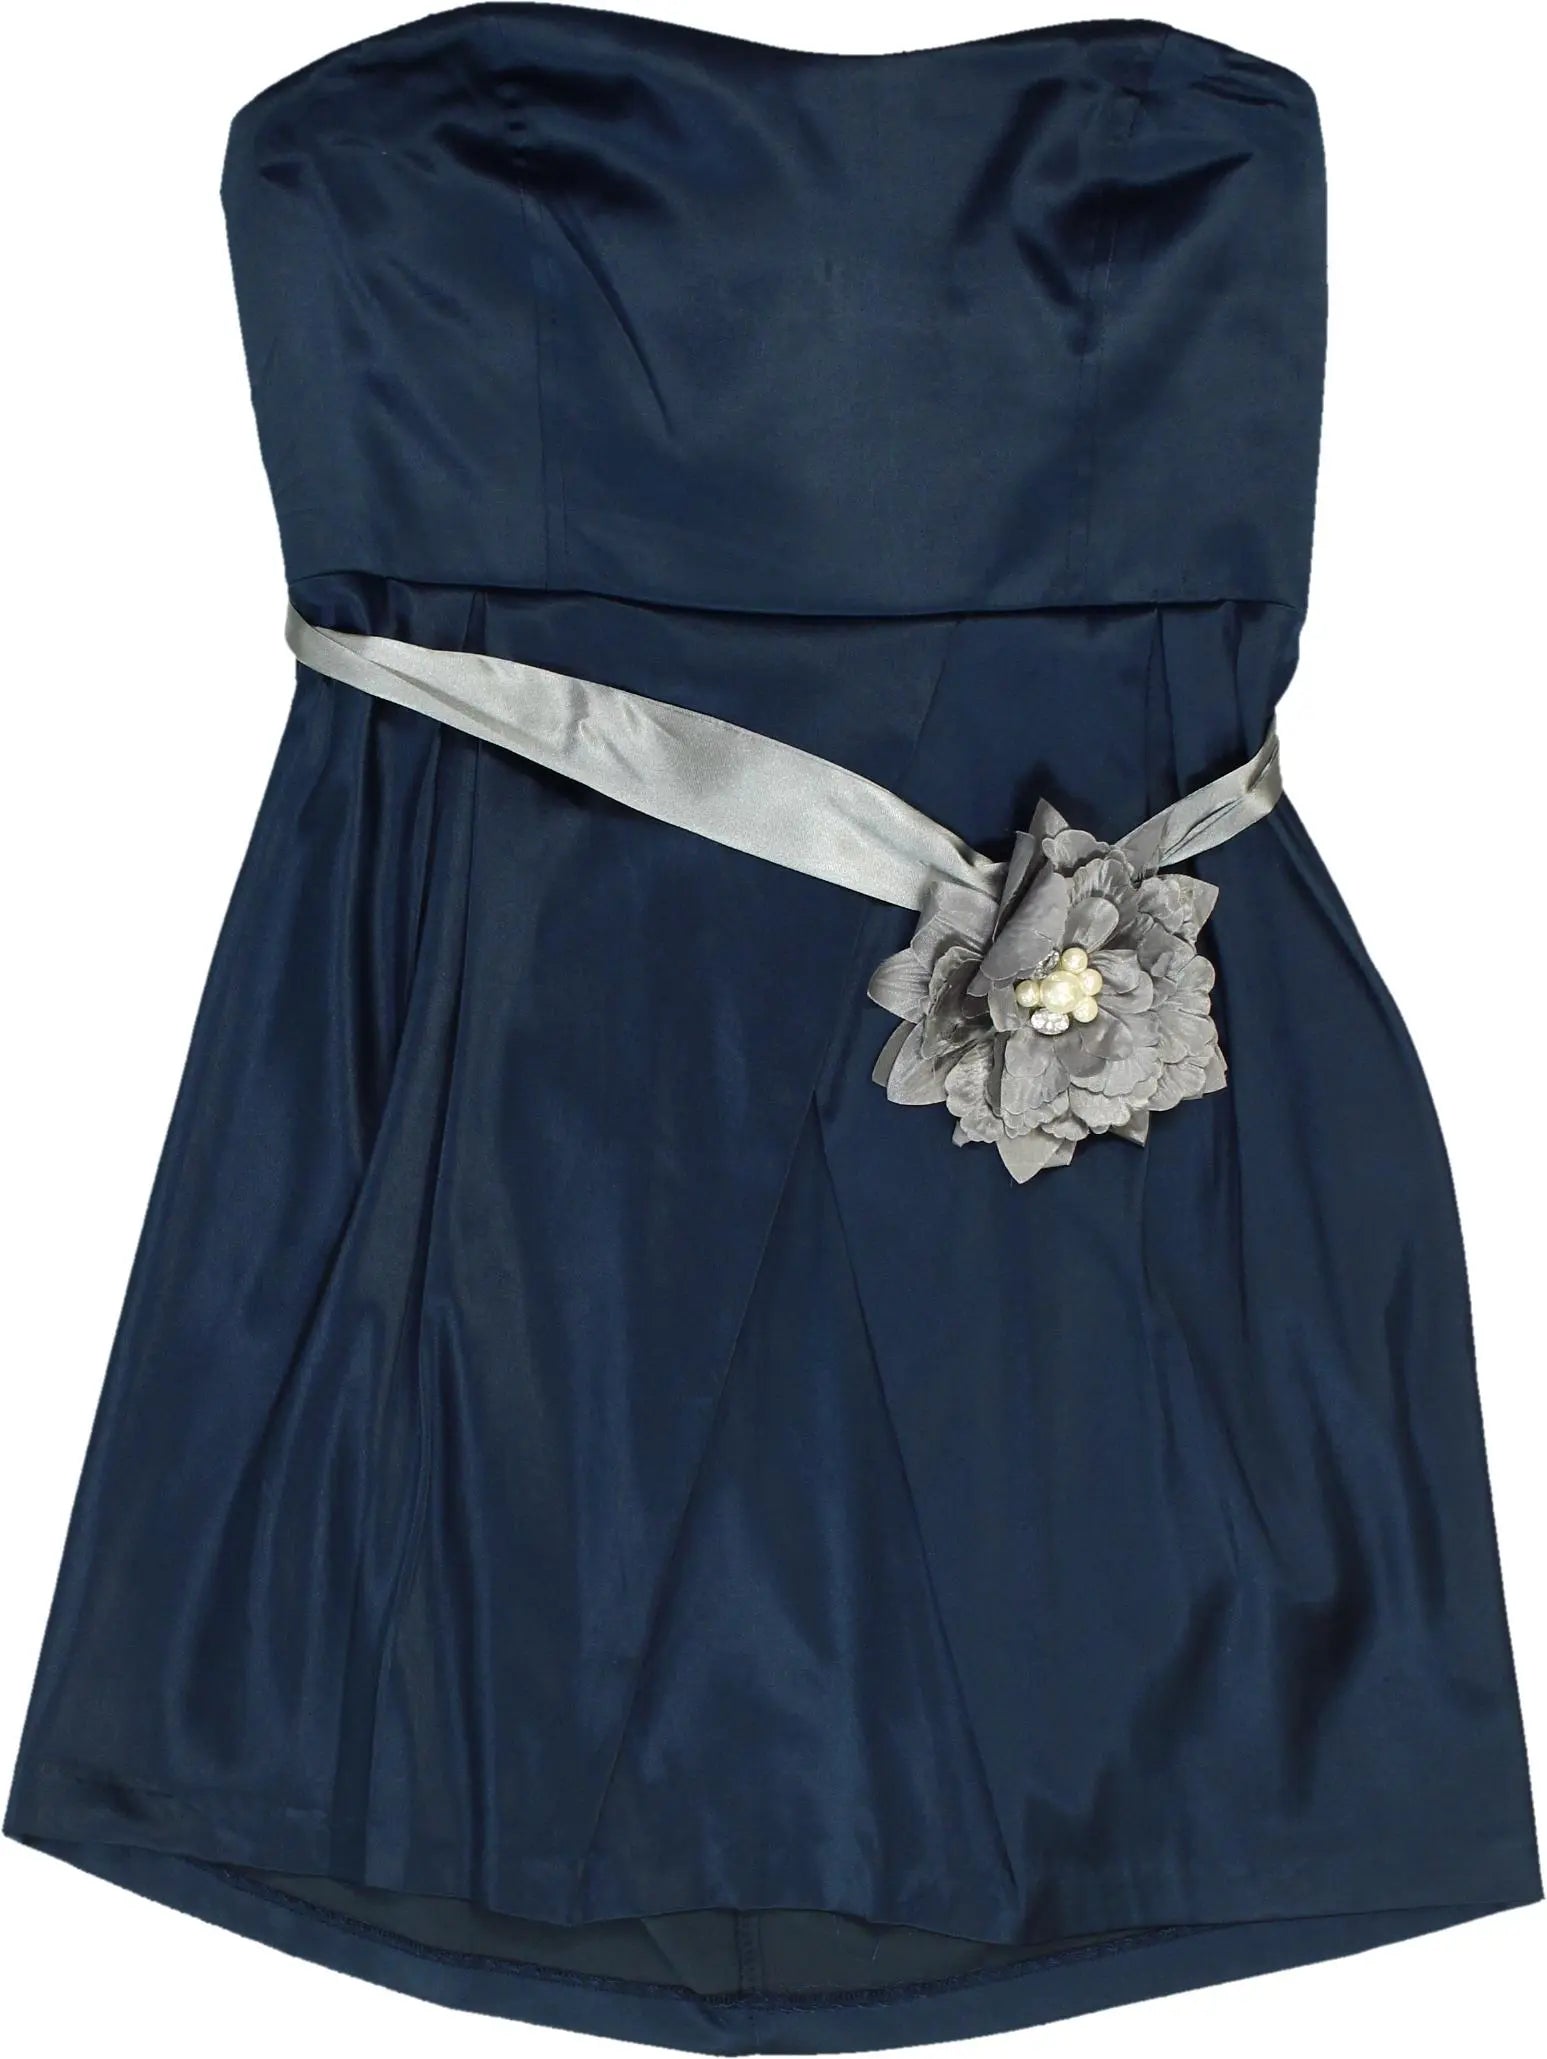 Jolie - Satin Mini Dress- ThriftTale.com - Vintage and second handclothing